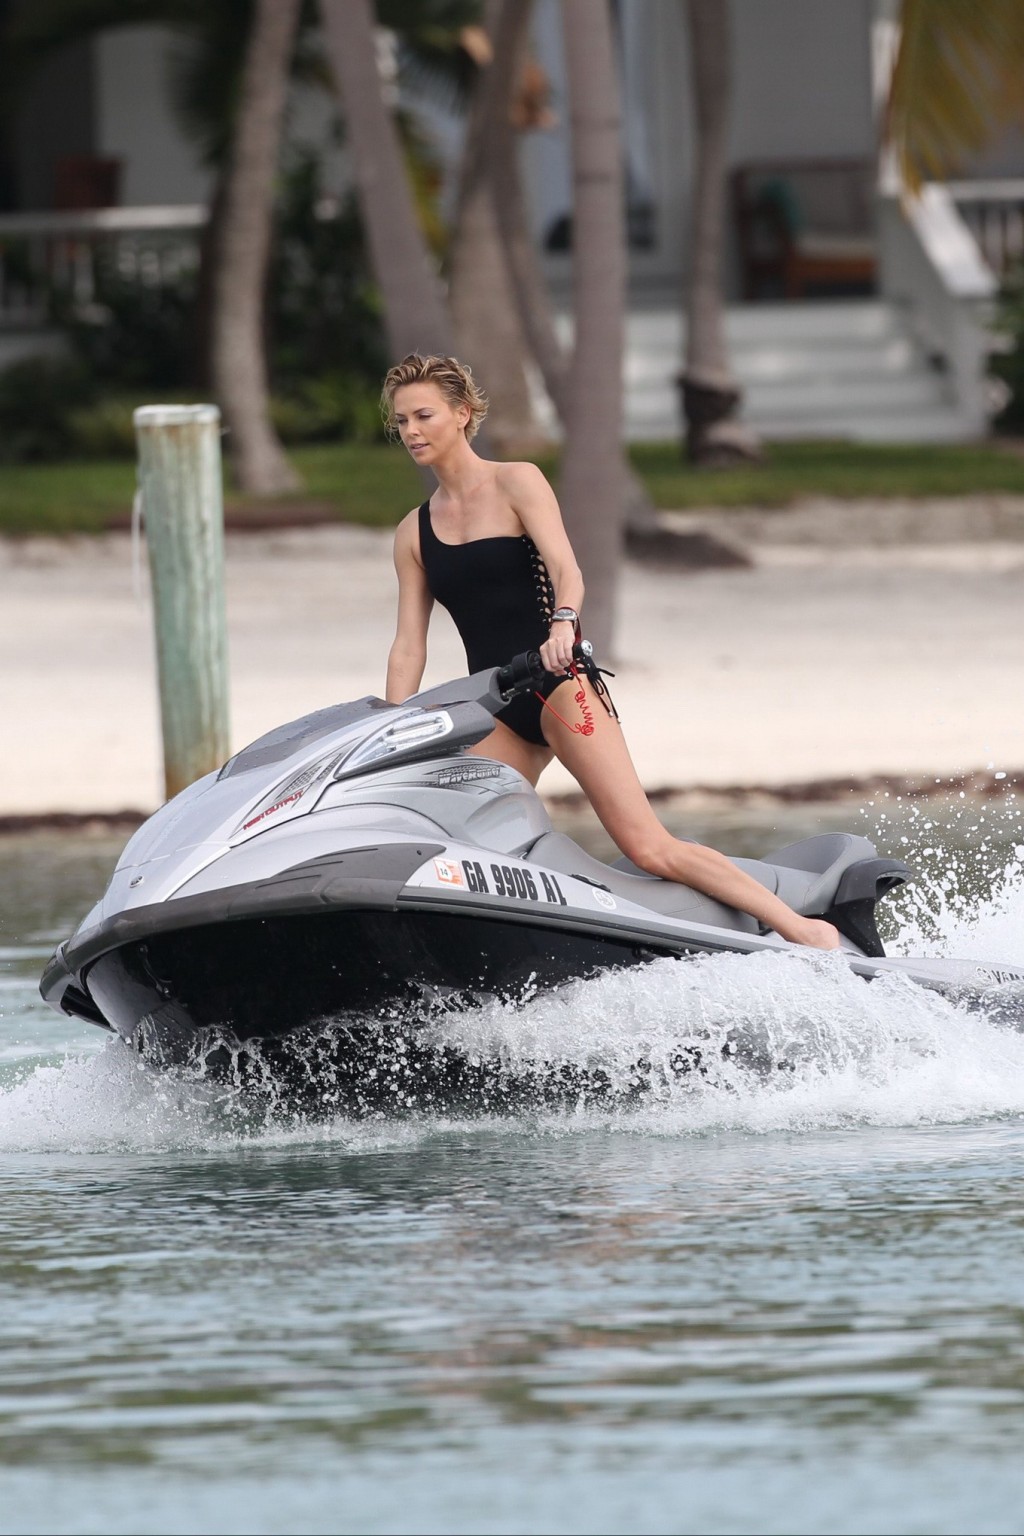 Charlize theron jet skiing in schwarzem monokini während des photoshoot in miami beac
 #75201284